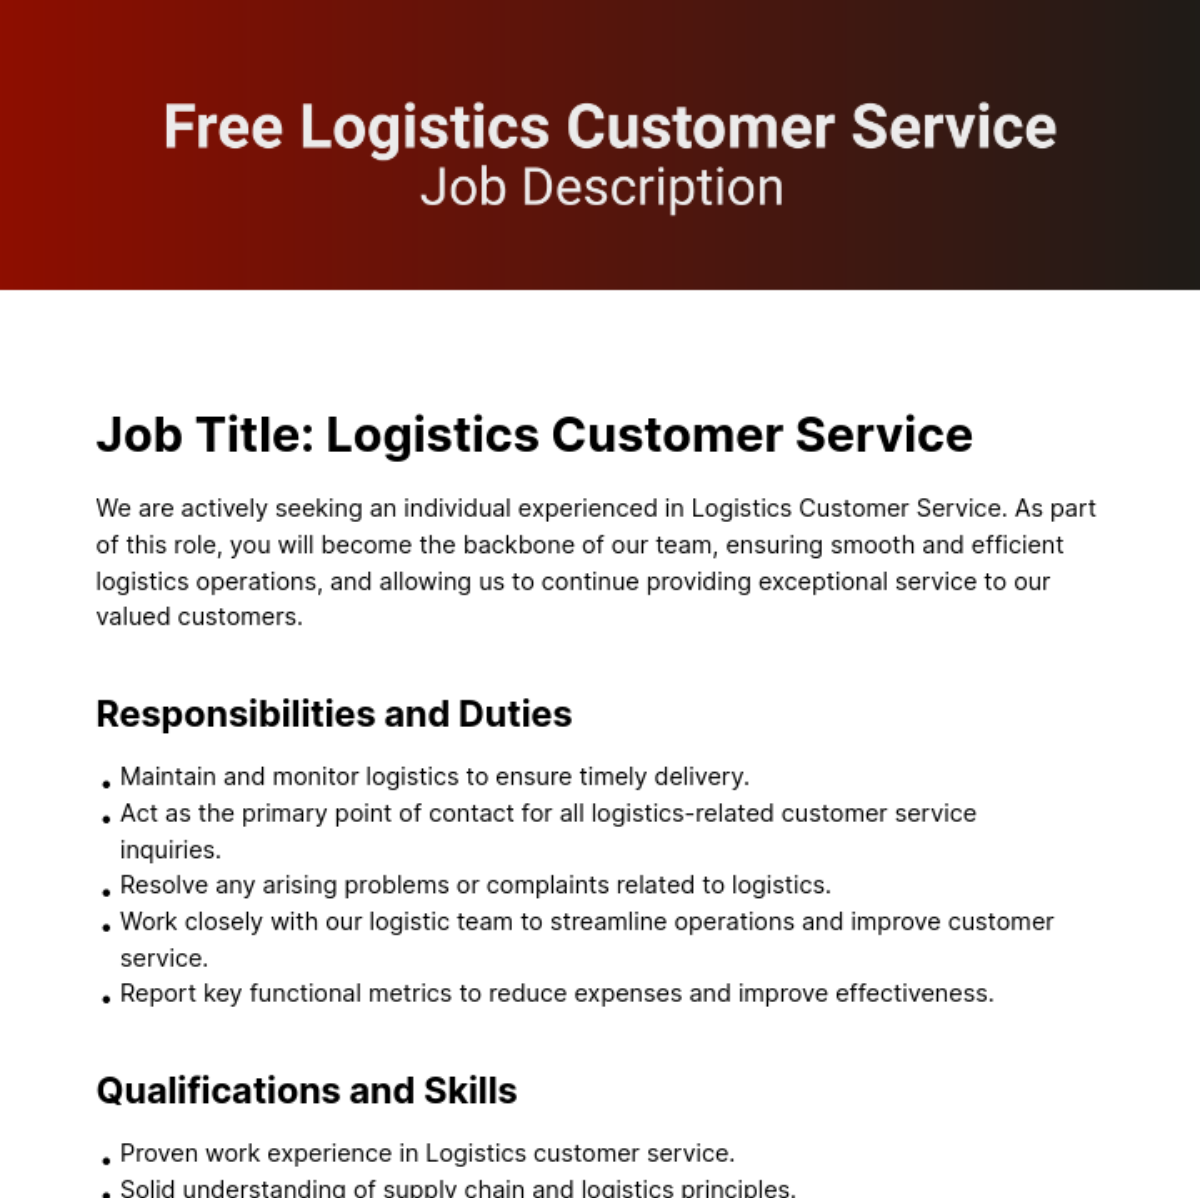 Free Logistics Customer Service Job Description Template